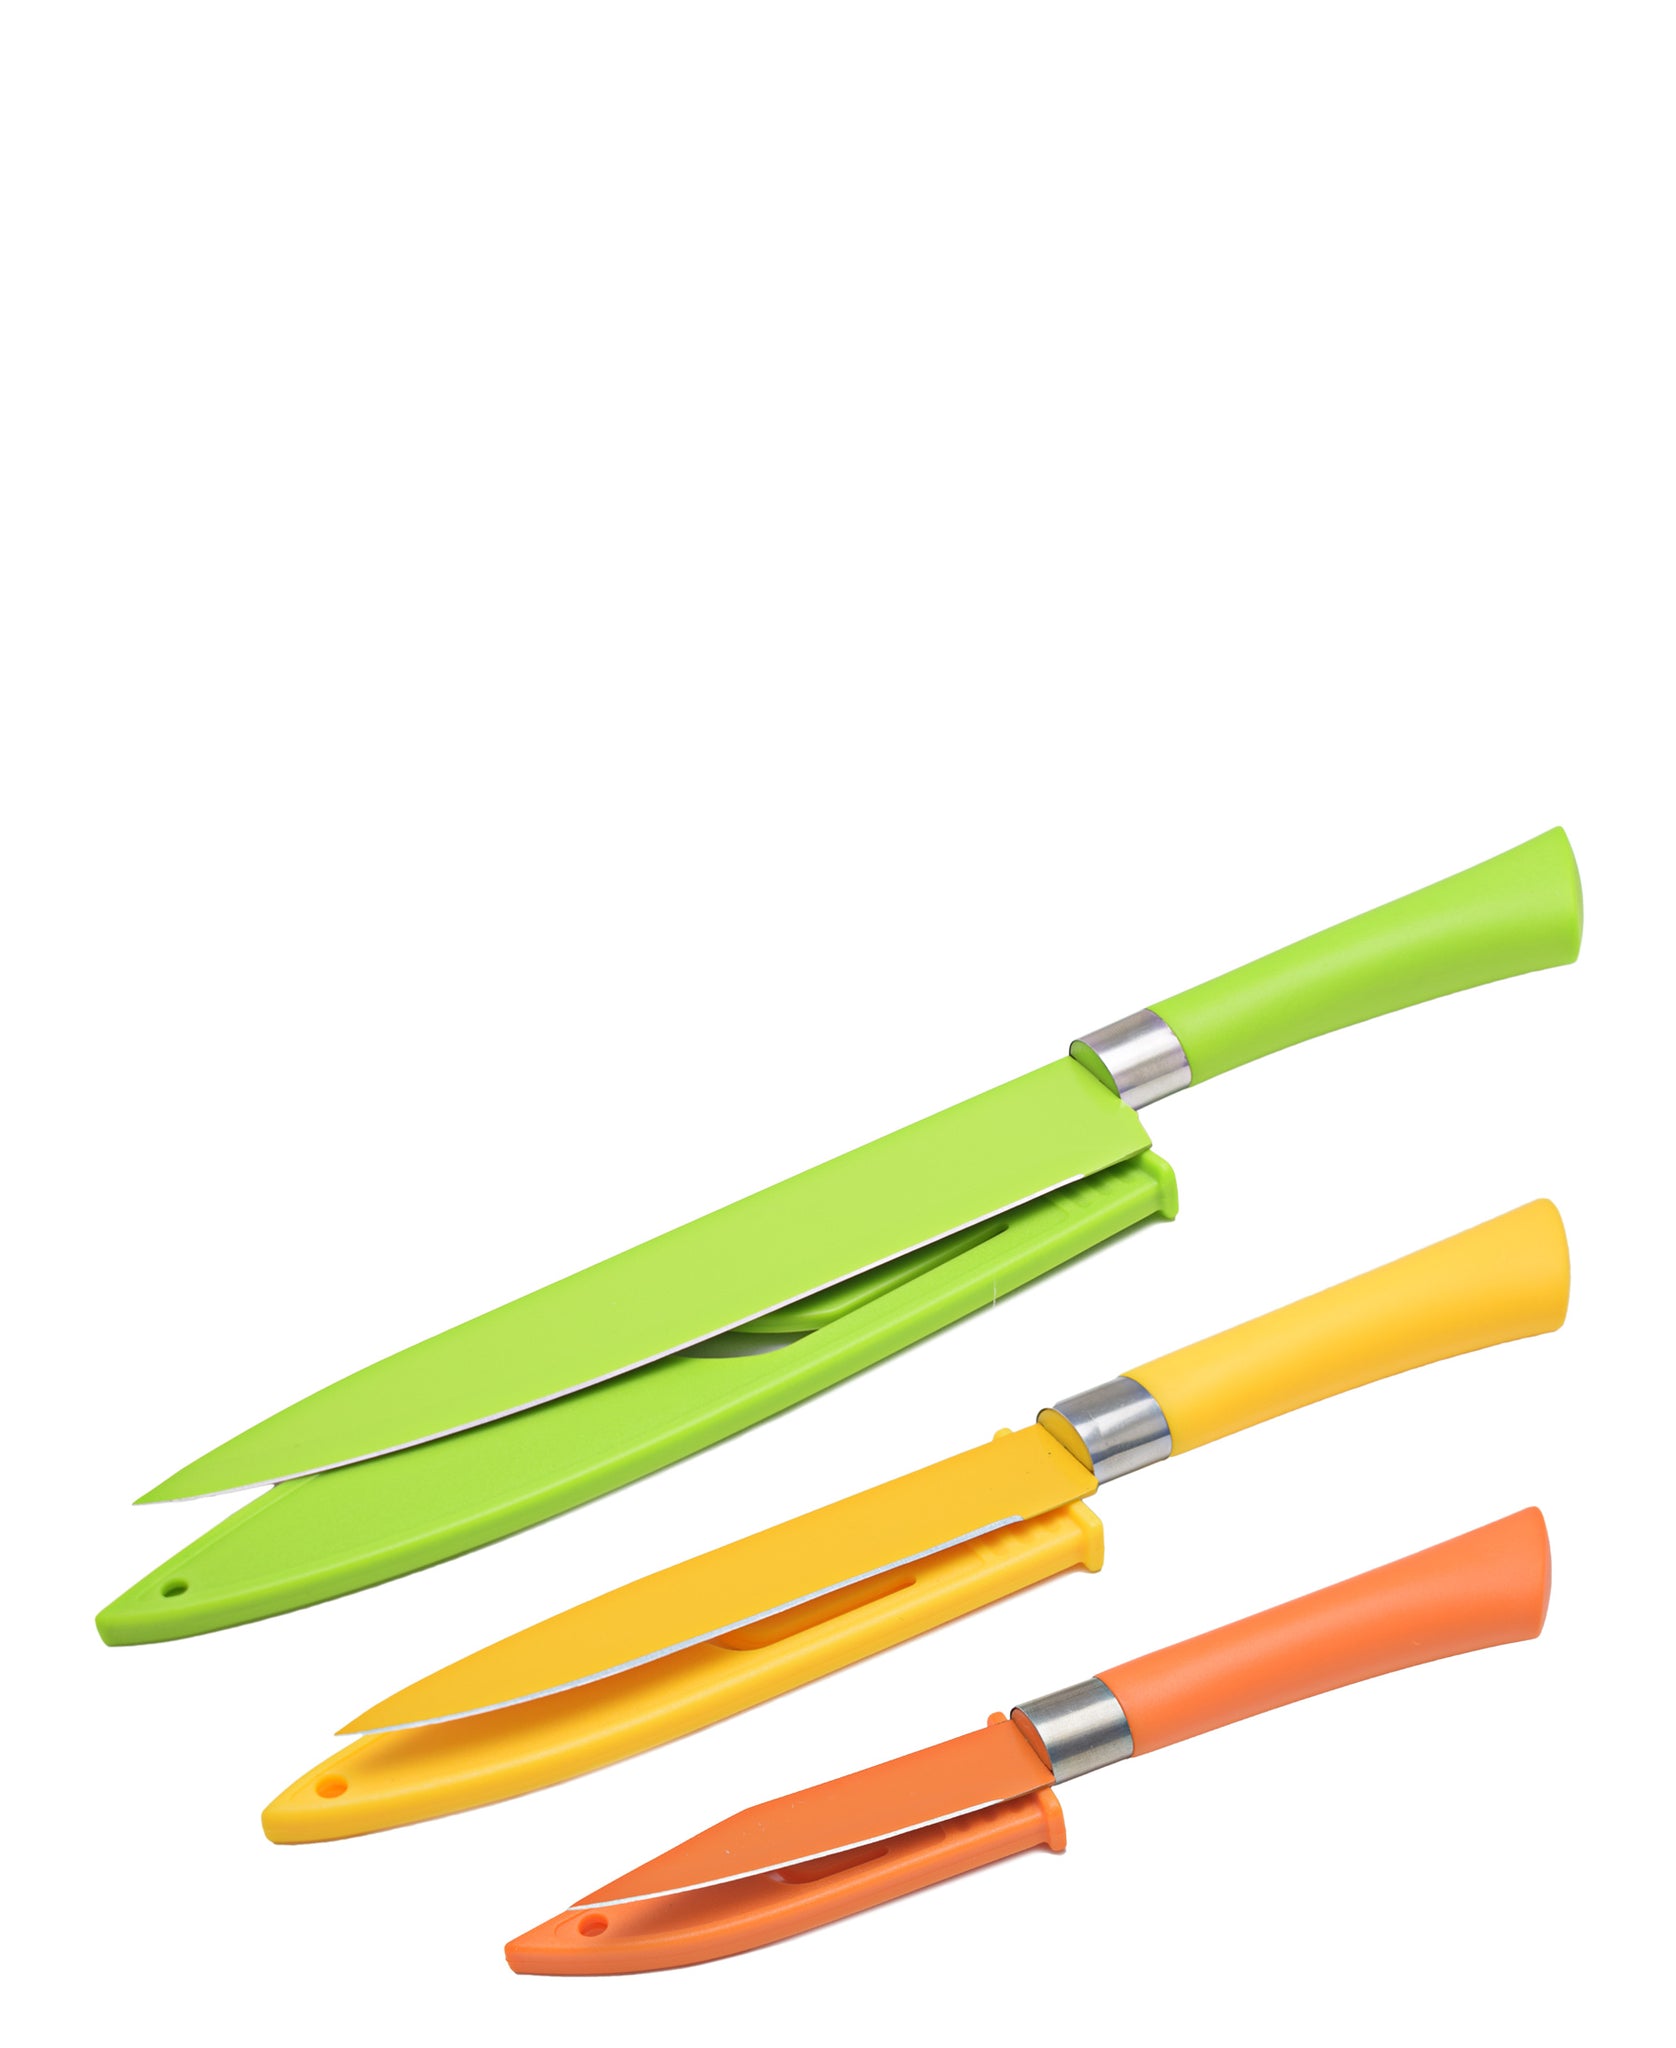 Table Pride 3 Piece Knife Set - Green, Orange & Yellow